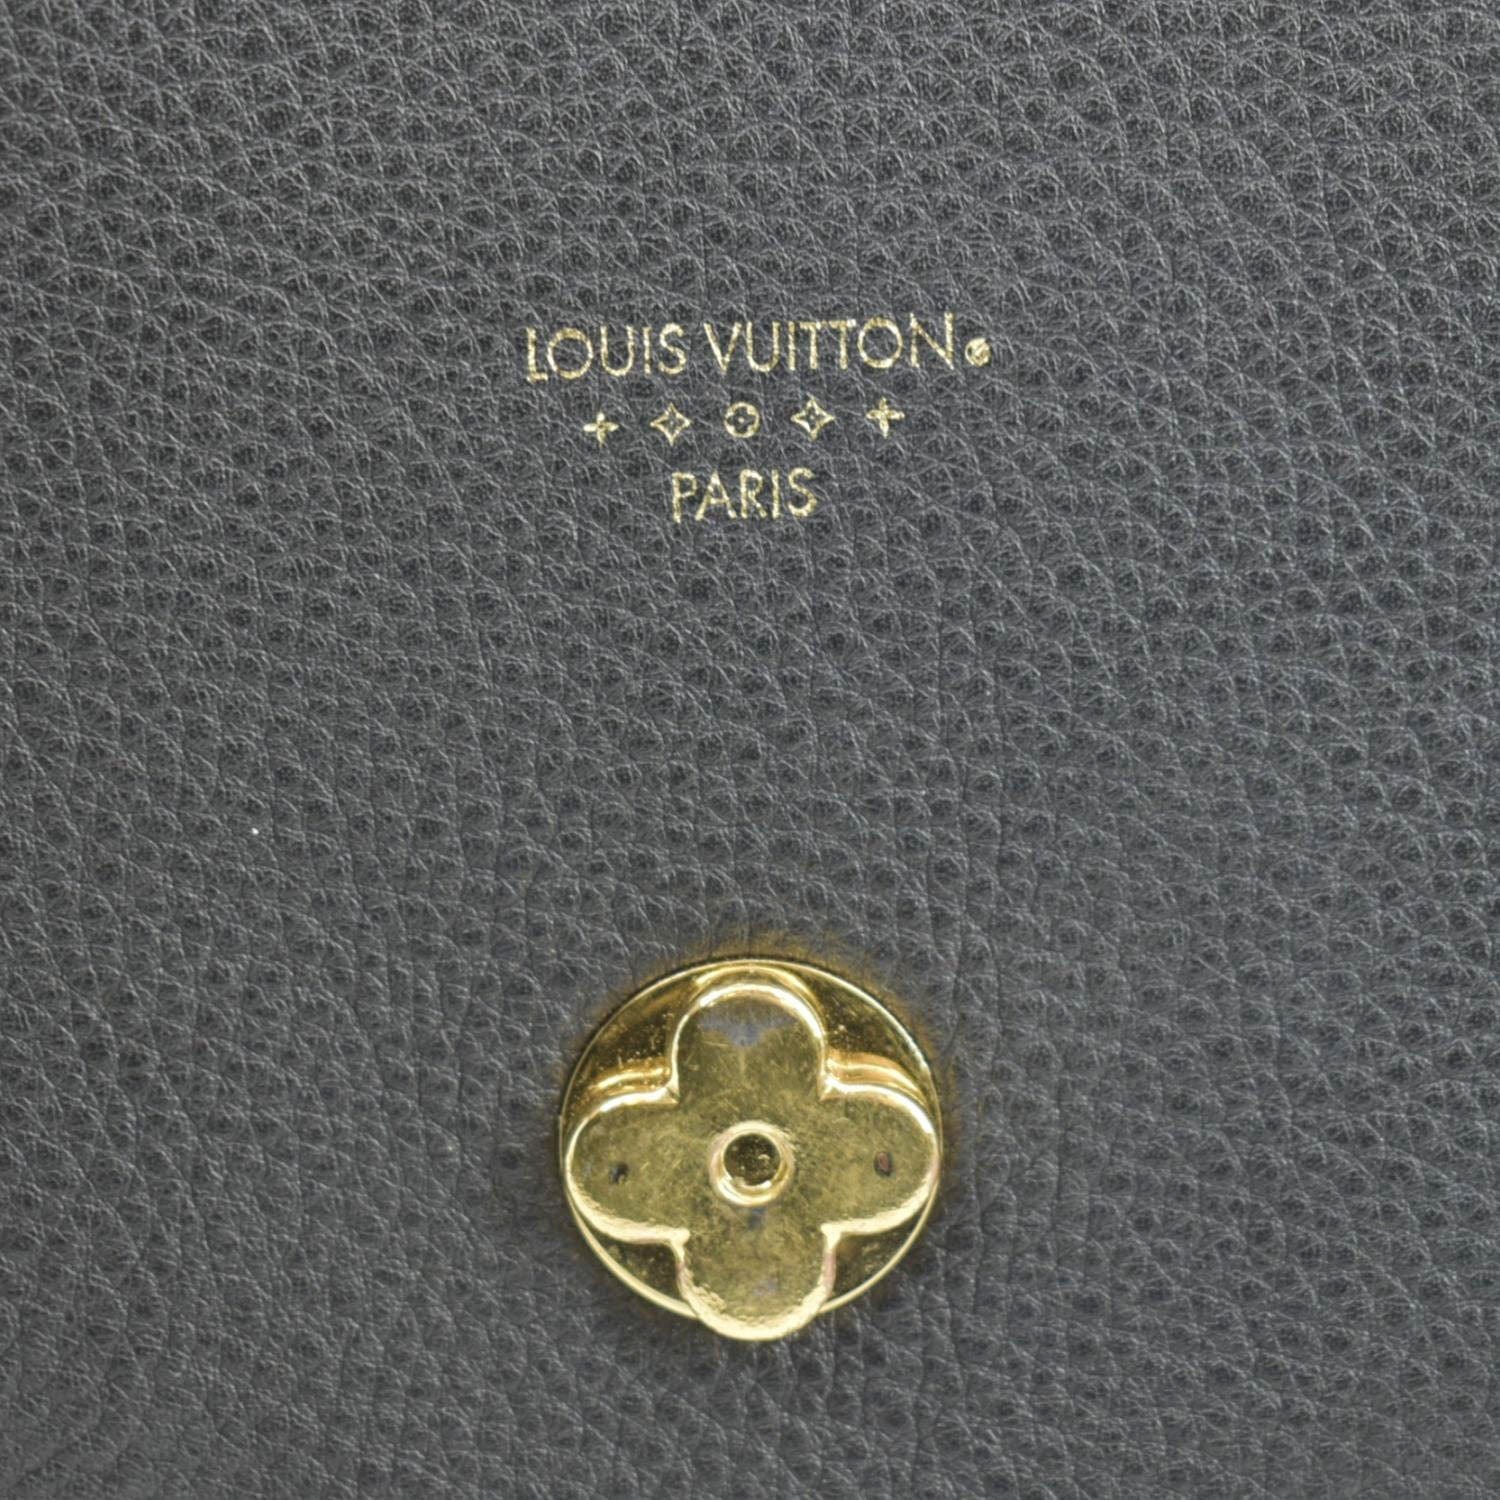 Shop Louis Vuitton PONT NEUF Lv Pont 9 Soft Mm (M58967) by CATSUSELECT